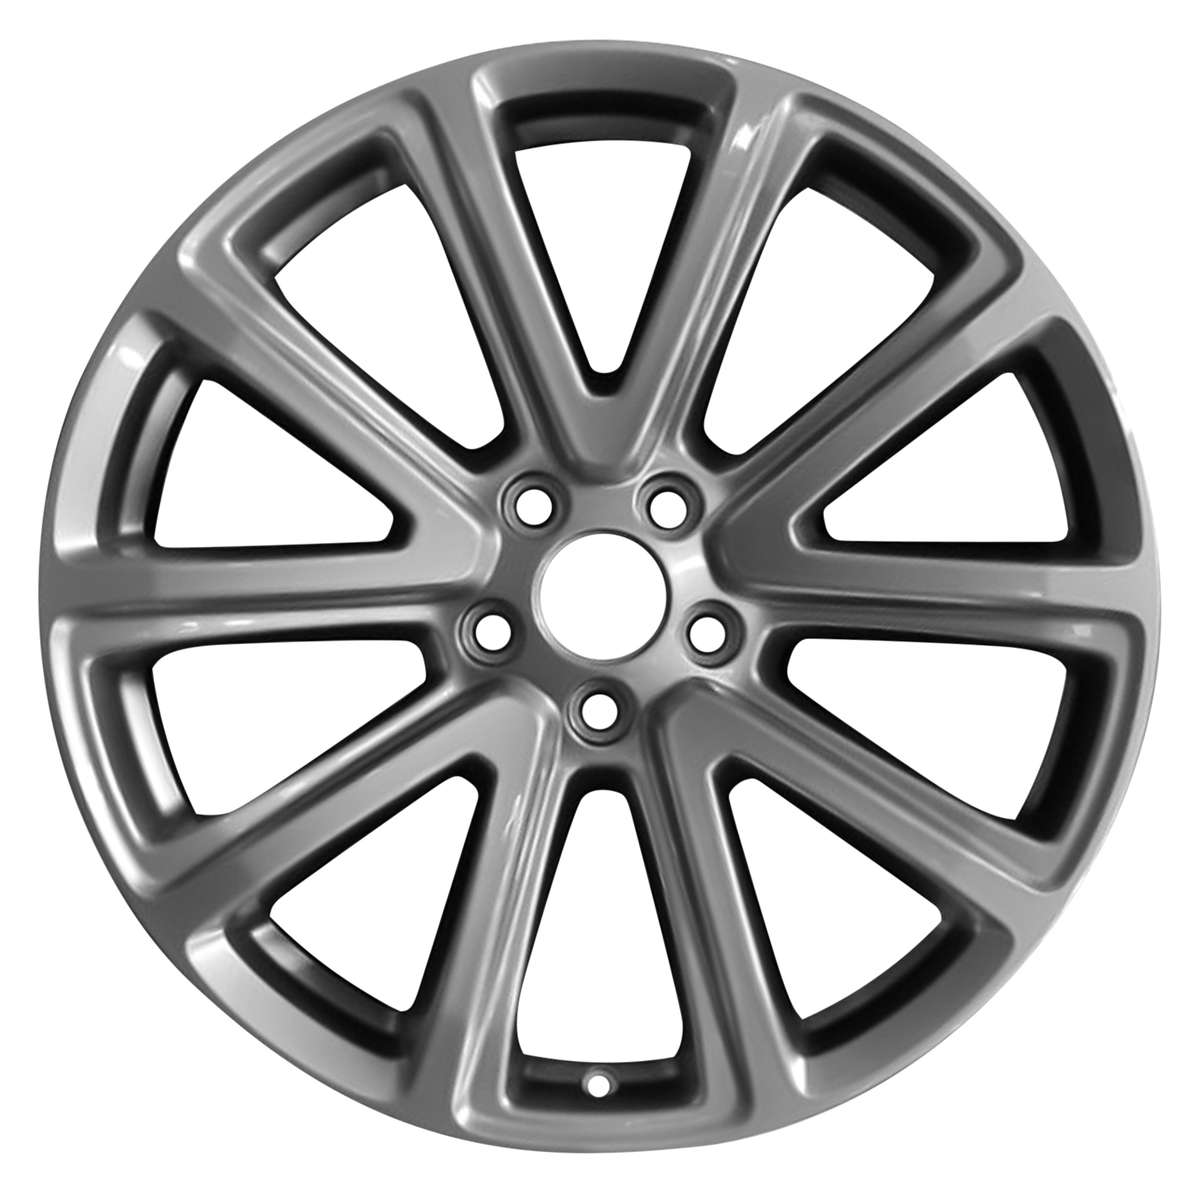 2016 Ford Explorer New 20" Replacement Wheel Rim RW3994S